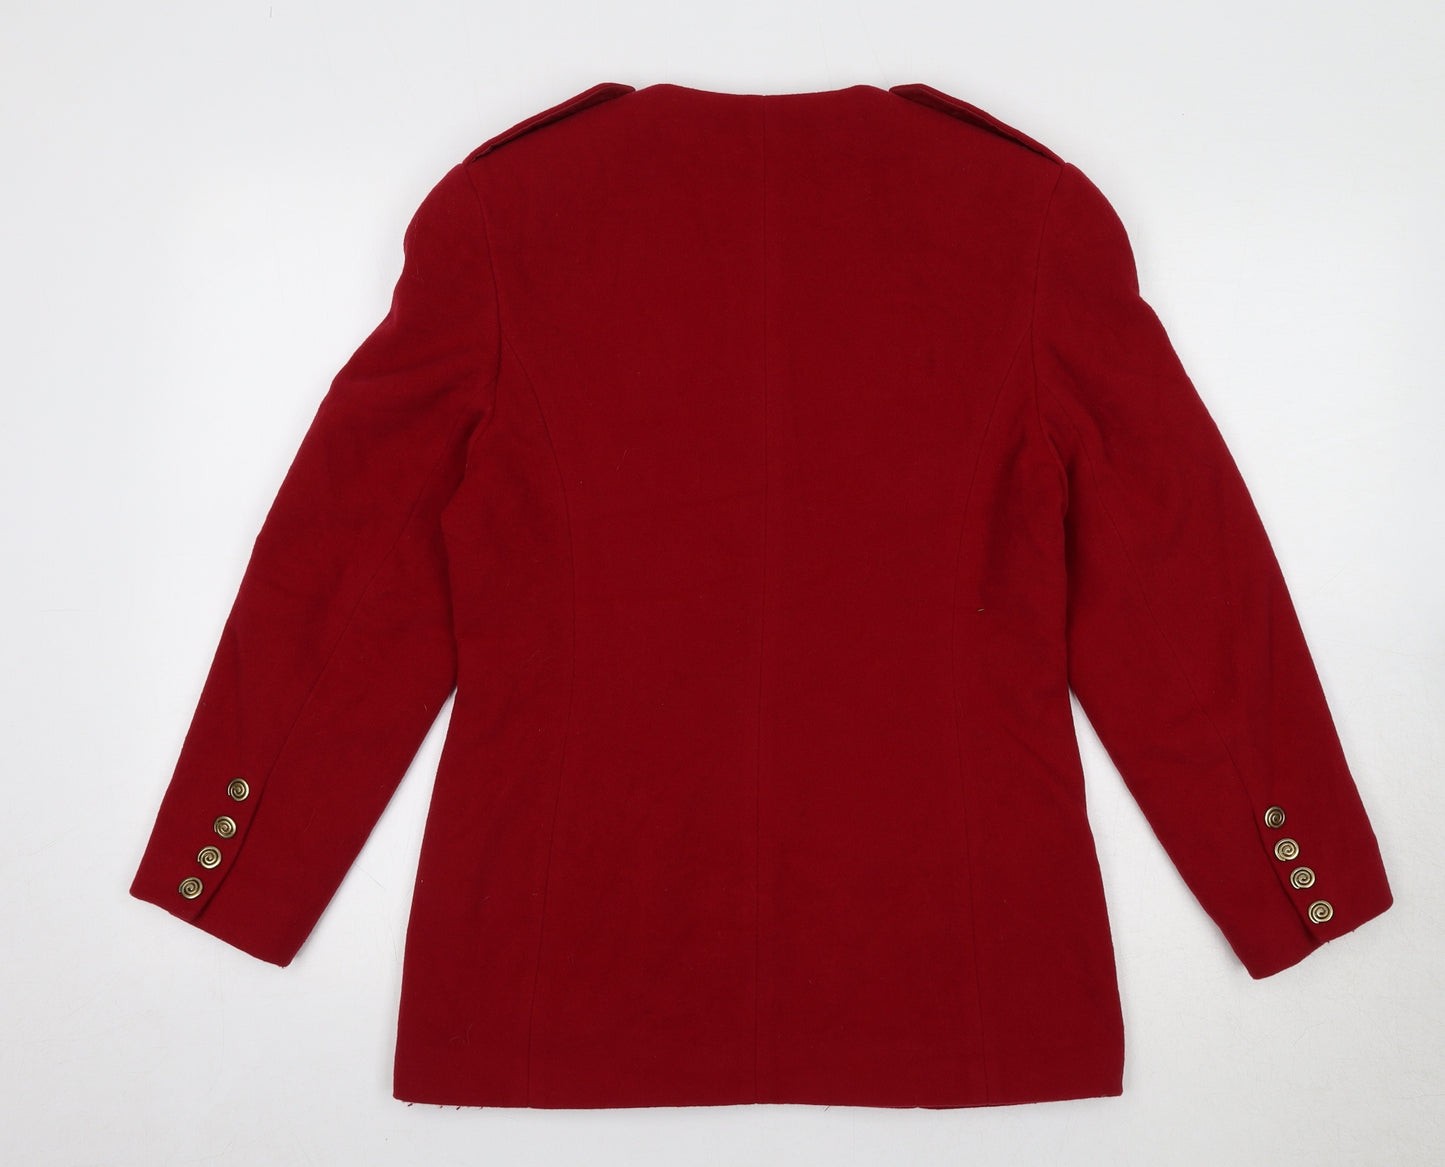 Precis Petite Womens Red Jacket Size 10 Button